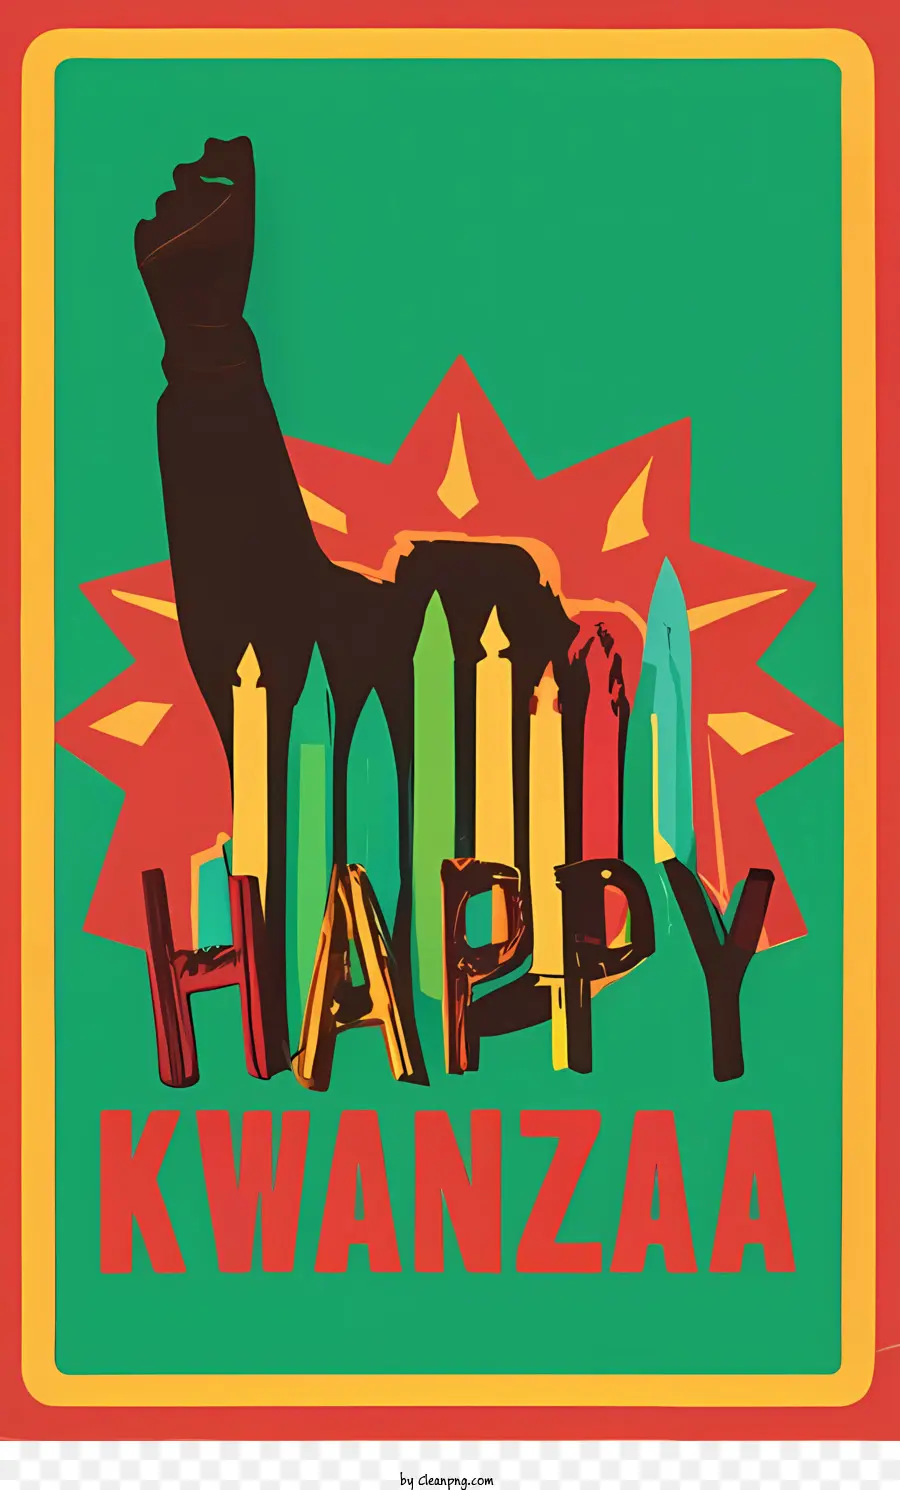 Happy Kwanzaa Happy Kwanzaa African American Culture Celebration Vielfalt - 